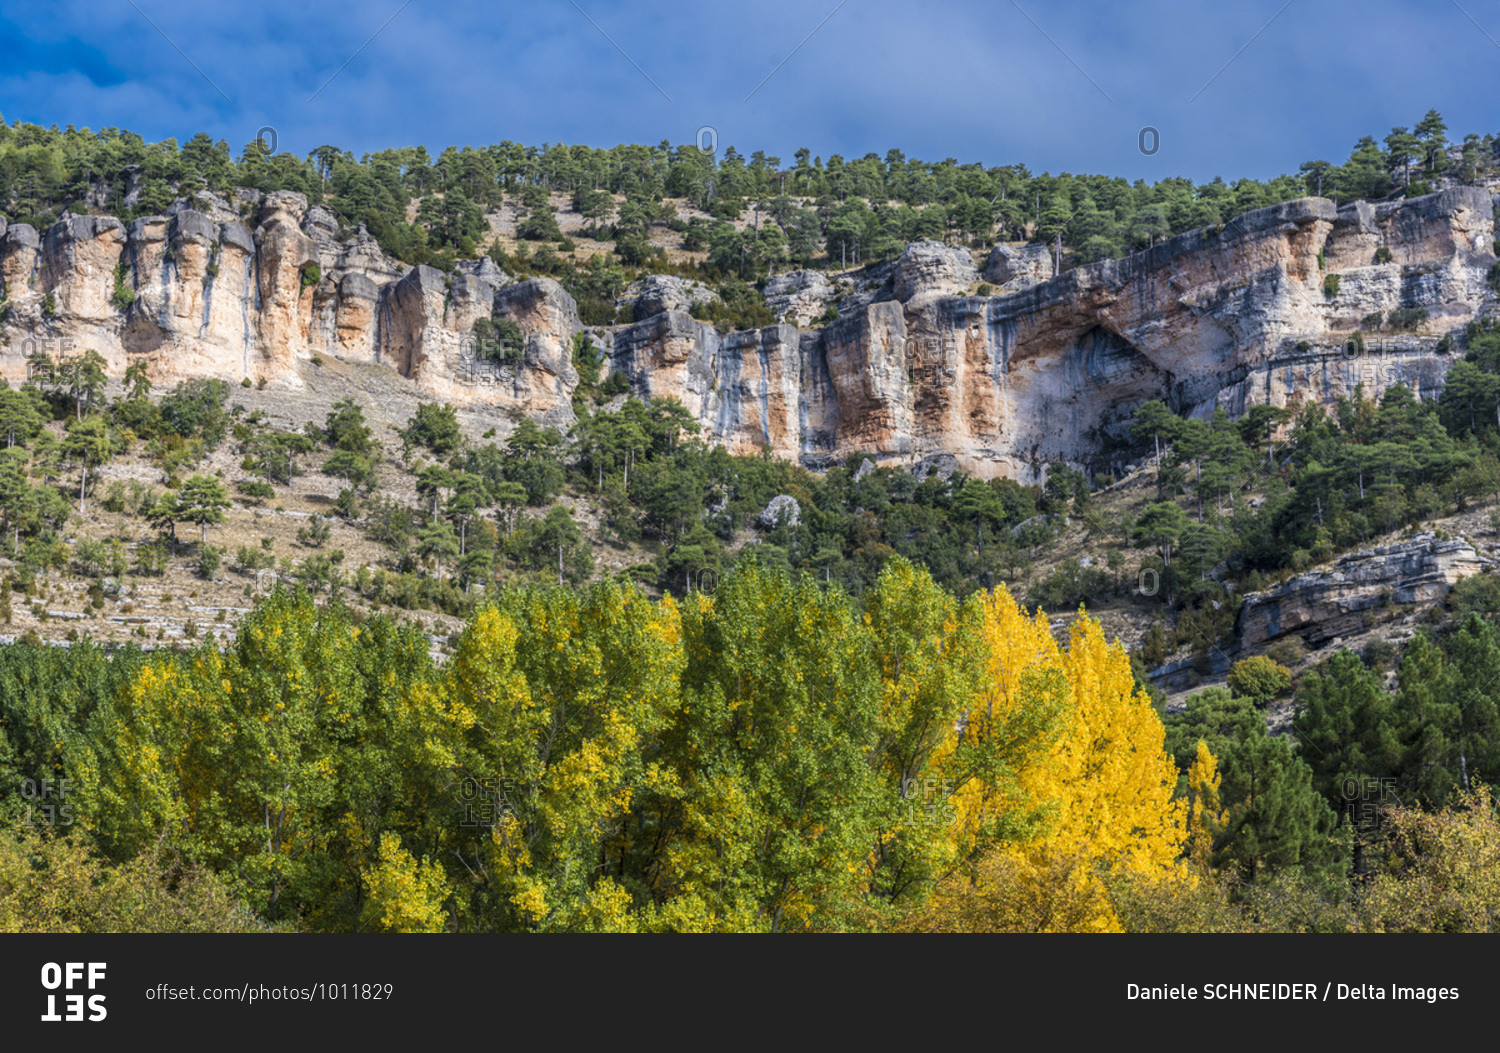 Spain, autonomous community of Castile - La Mancha, province of Cuenca, Serrania de Cuenca National park